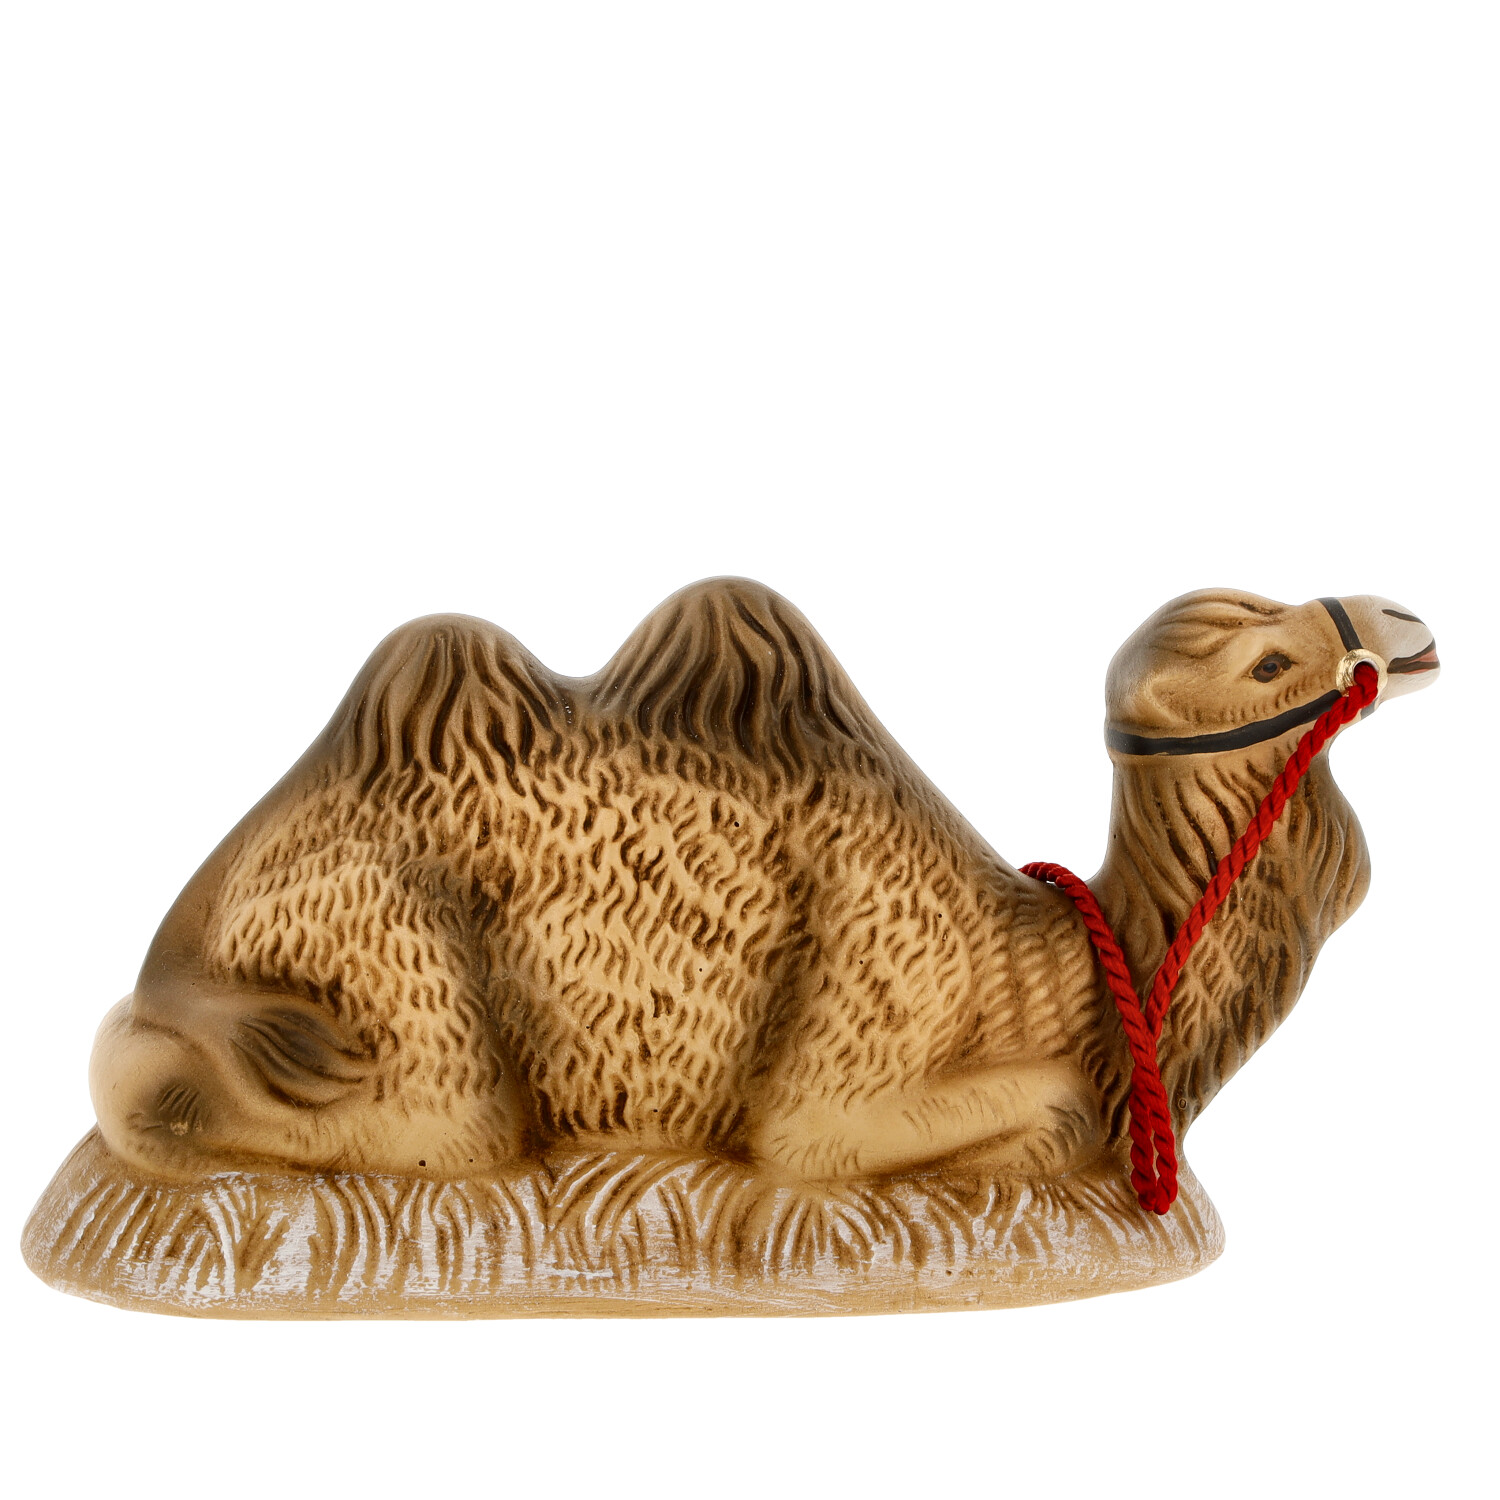 Kamel liegend, zu 12cm Marolin Krippenfiguren - made in Germany